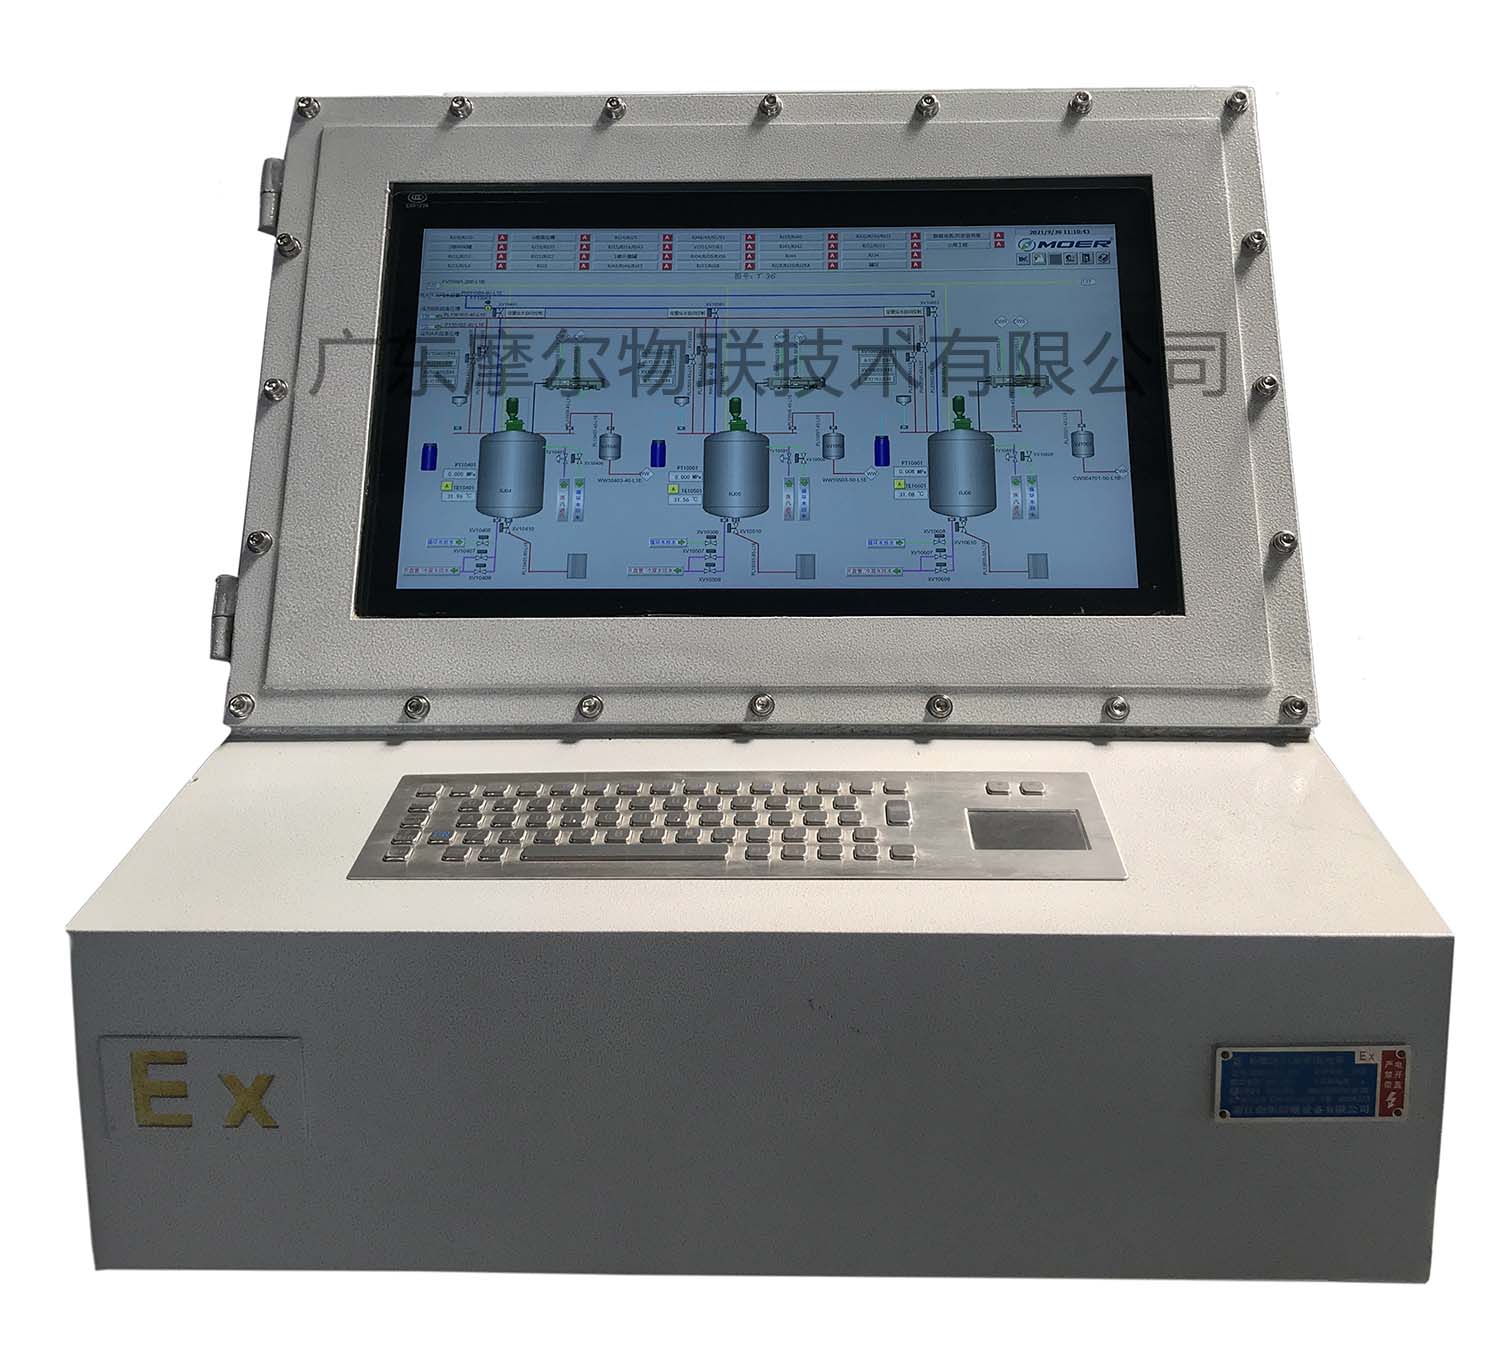 SPMO-800防爆电脑/防爆操作终端(图1)